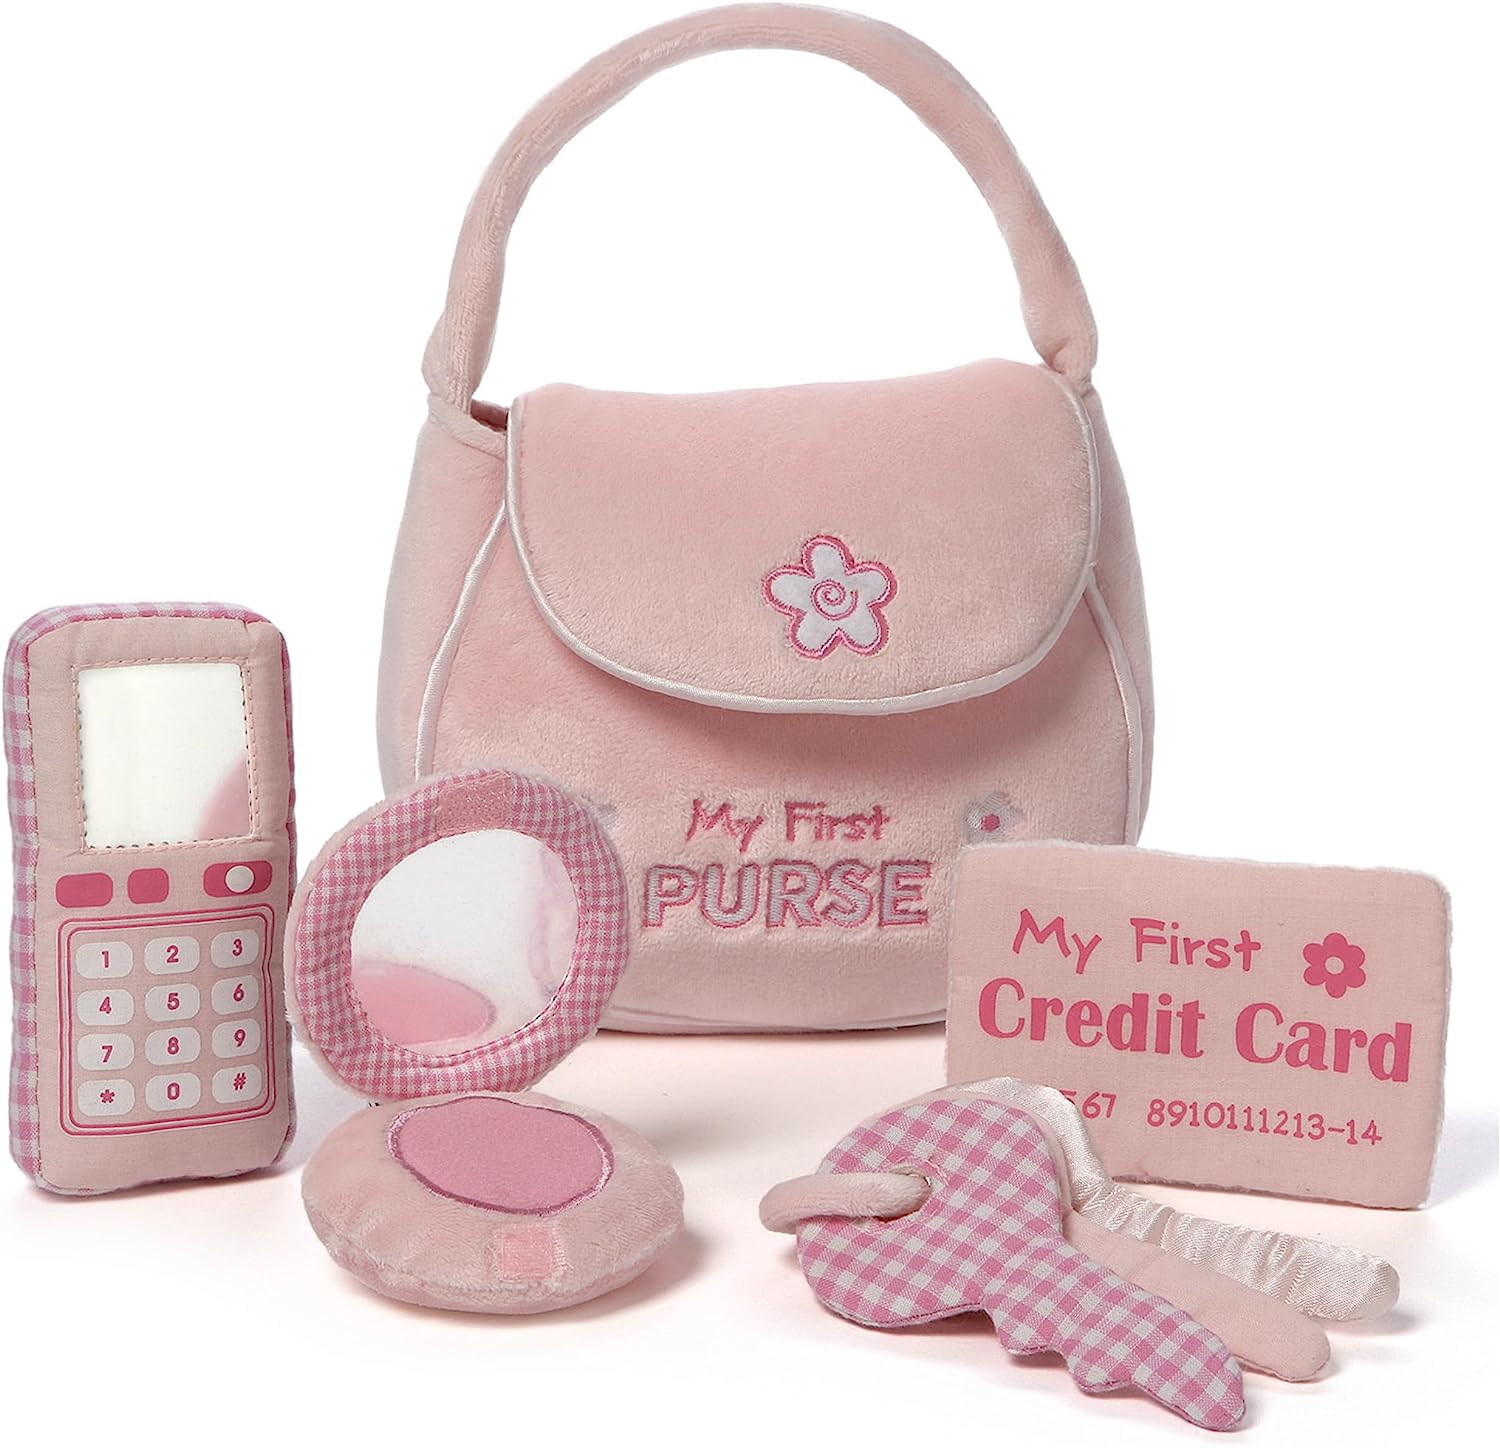 Baby GUND My First Purse Stuffed Plush Playset